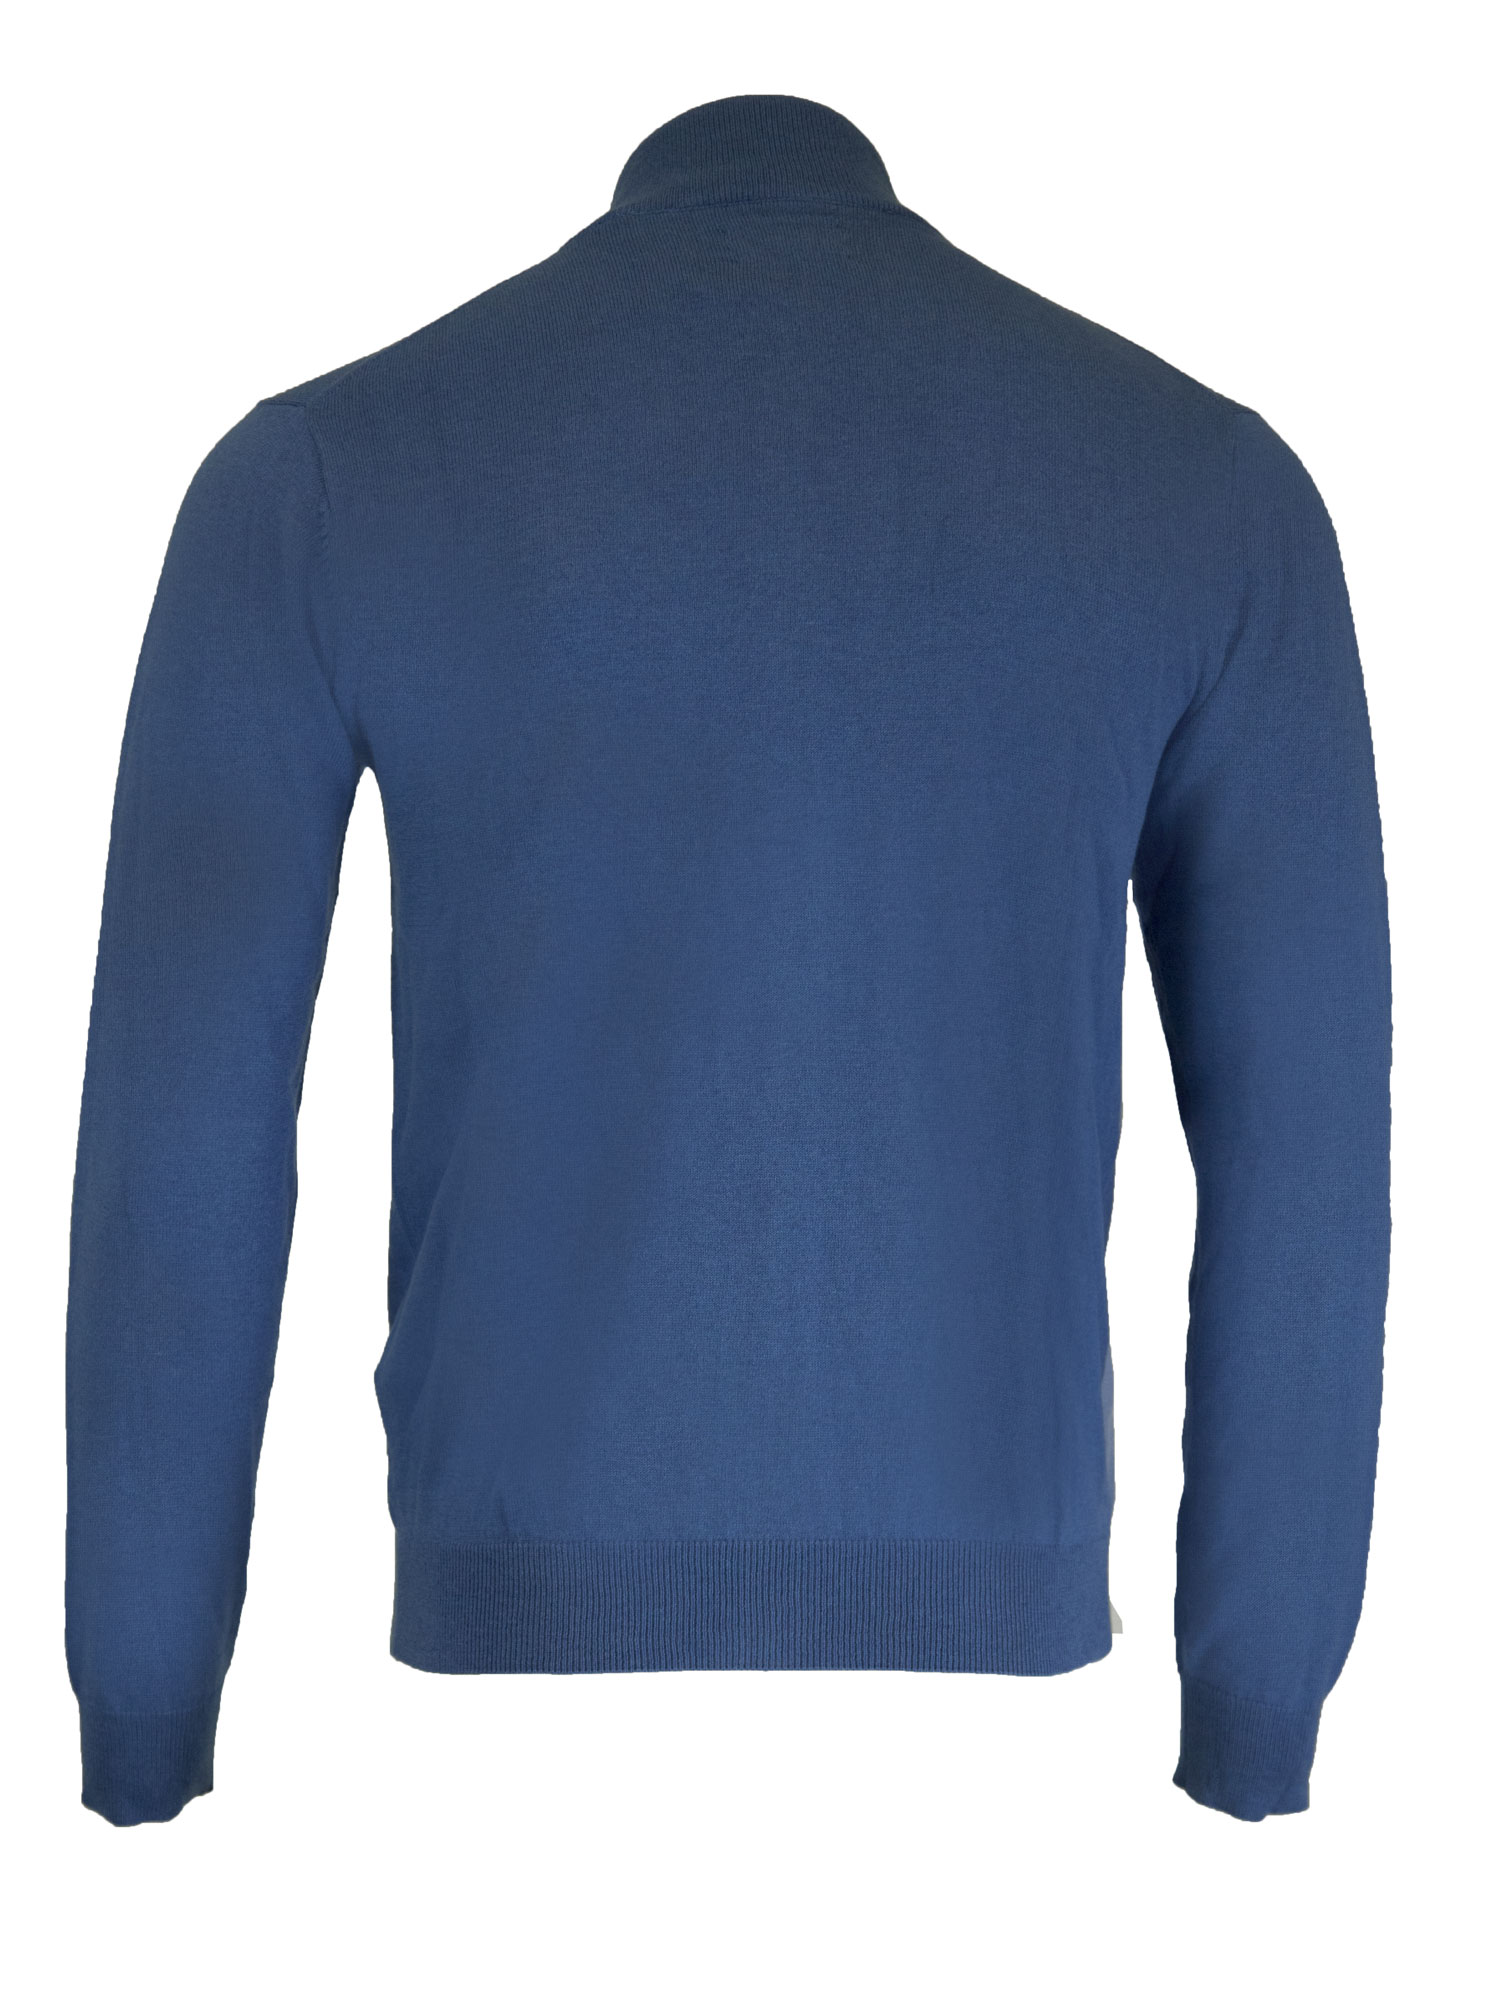 GANT Men's Palace Blue Cotton Wool Full Zip Cardigan 83104 Size M NWT ...